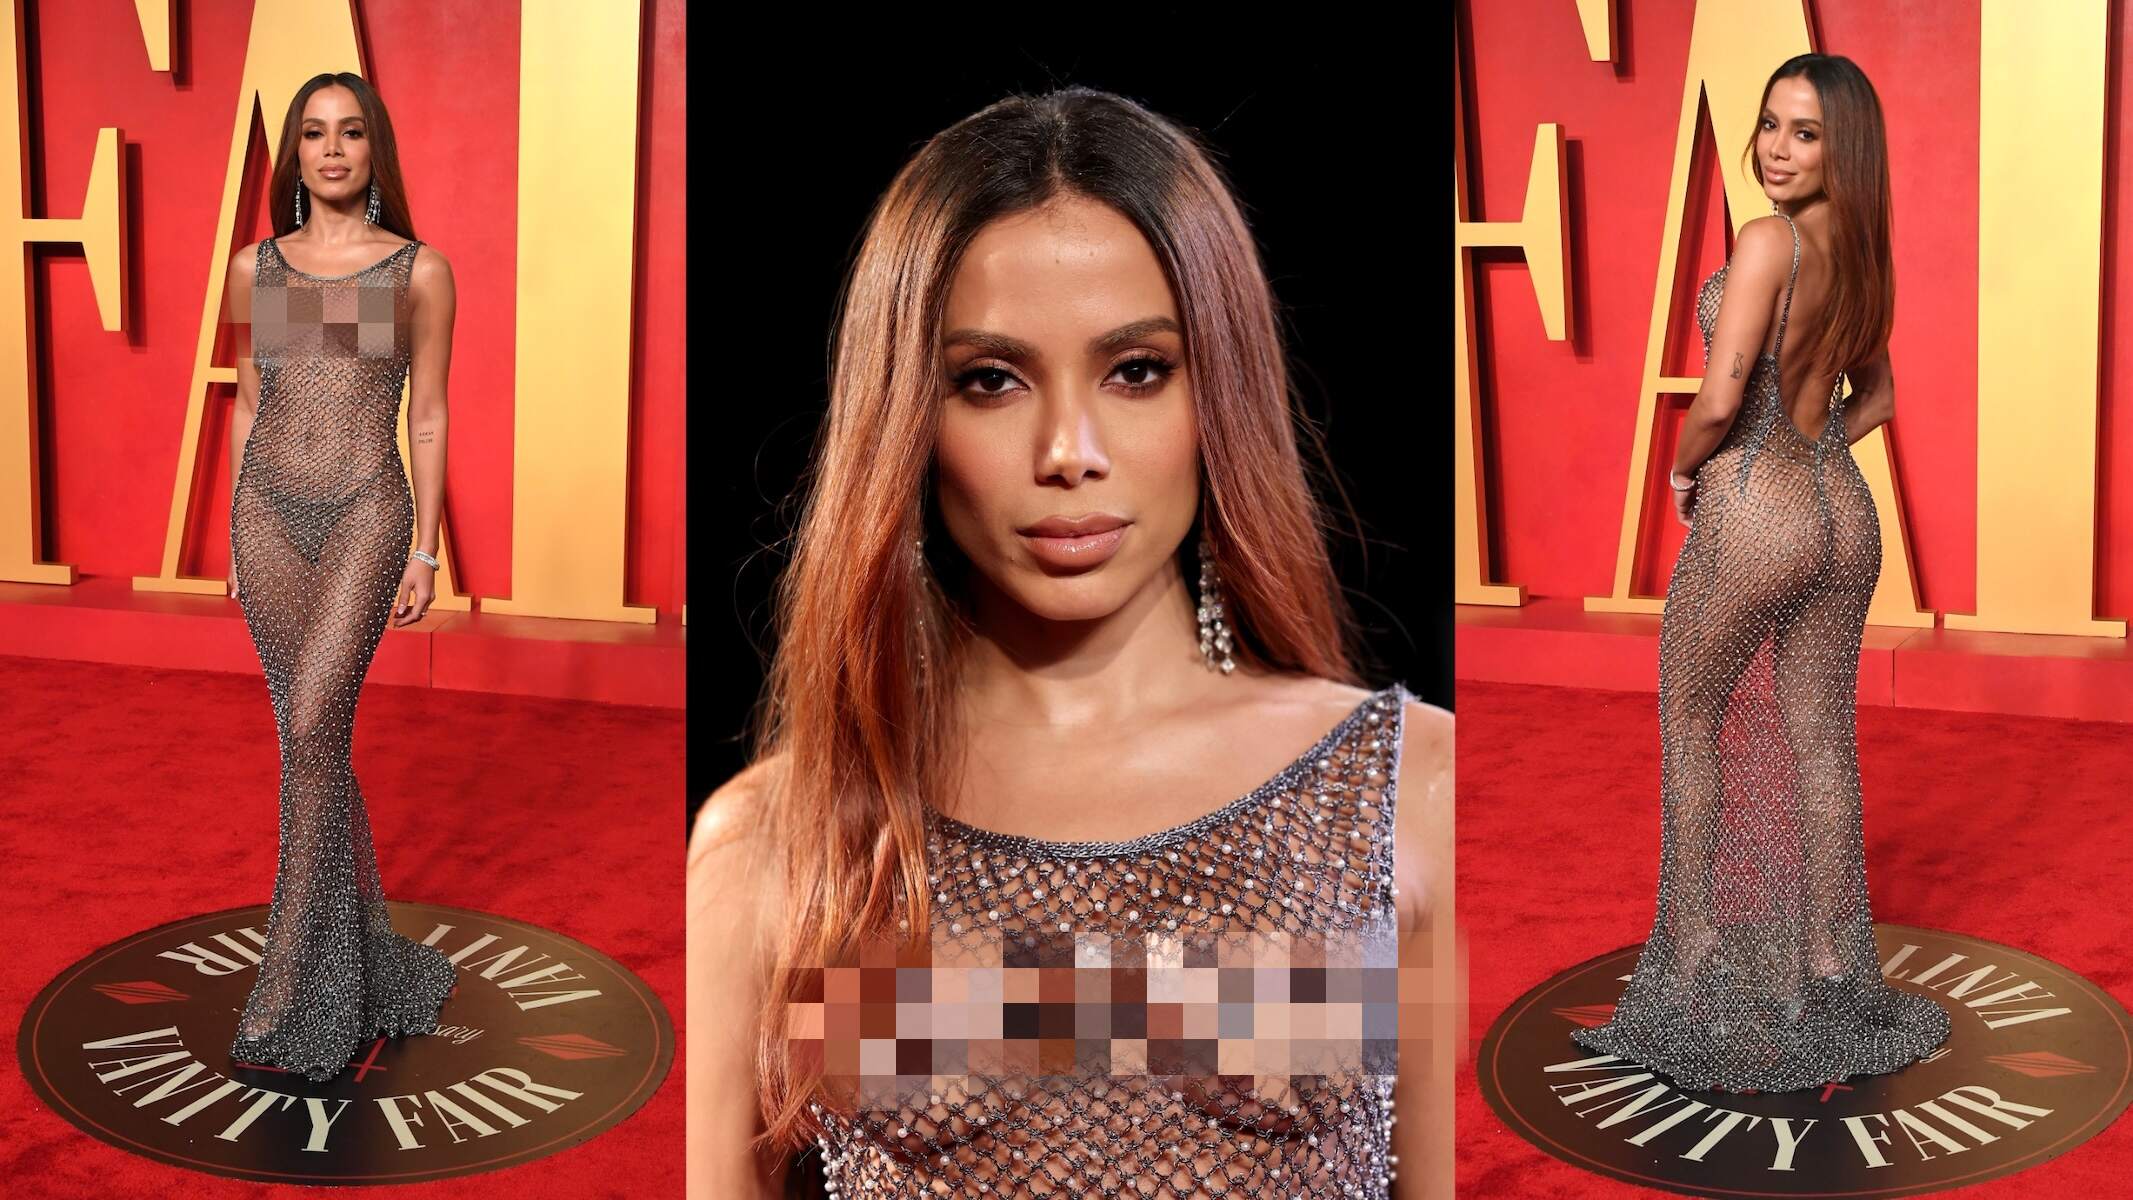 Brazilian singer Anitta wears a see-through mesh dress at the Vanity Fair Oscar Party